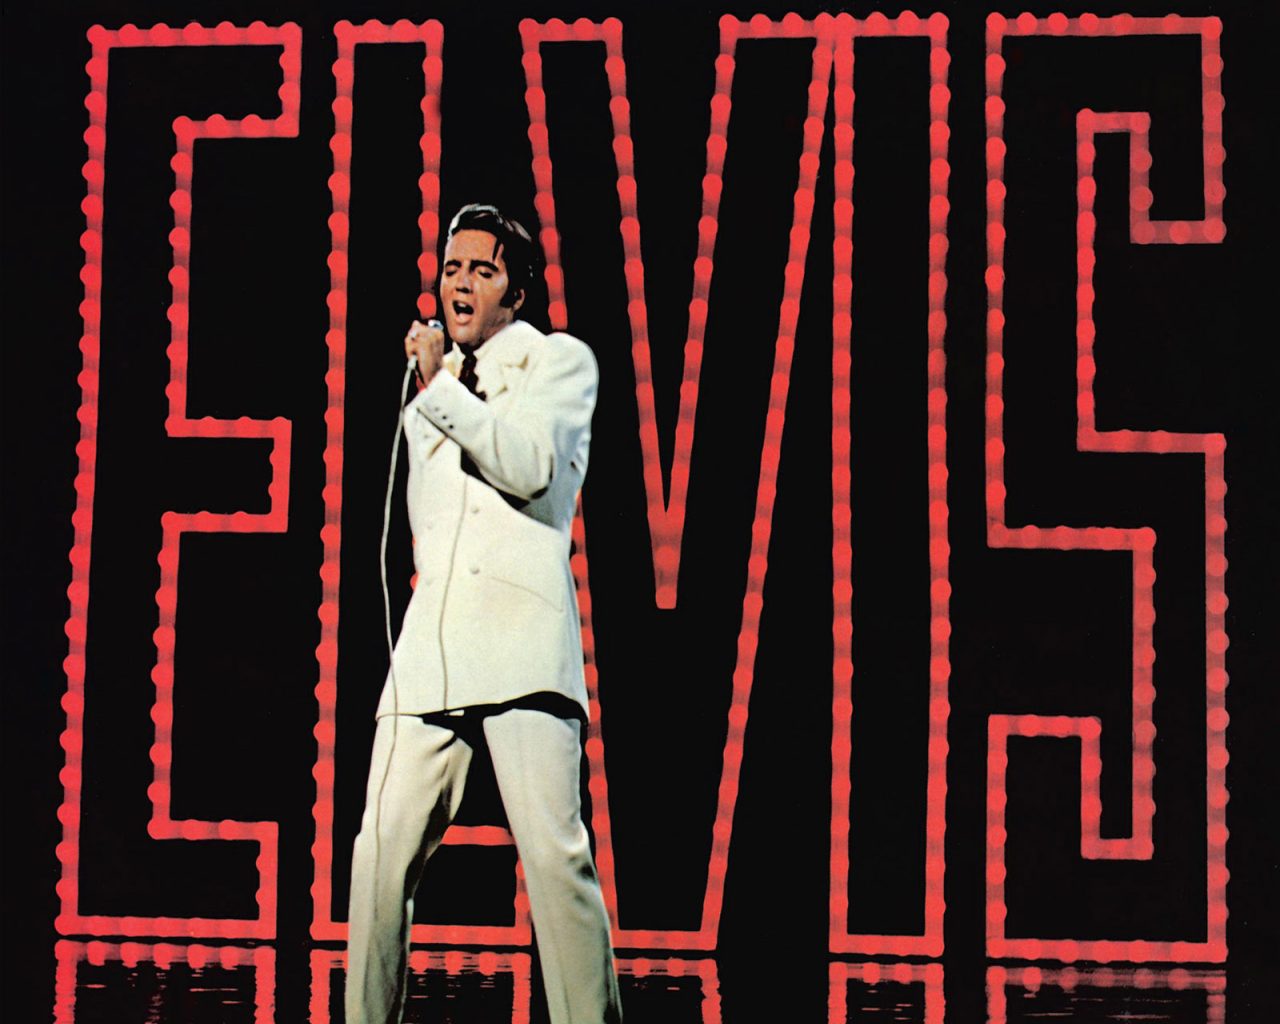  wallpaper de Elvis Presley en una actuacin a 1280x1024 Fotos e